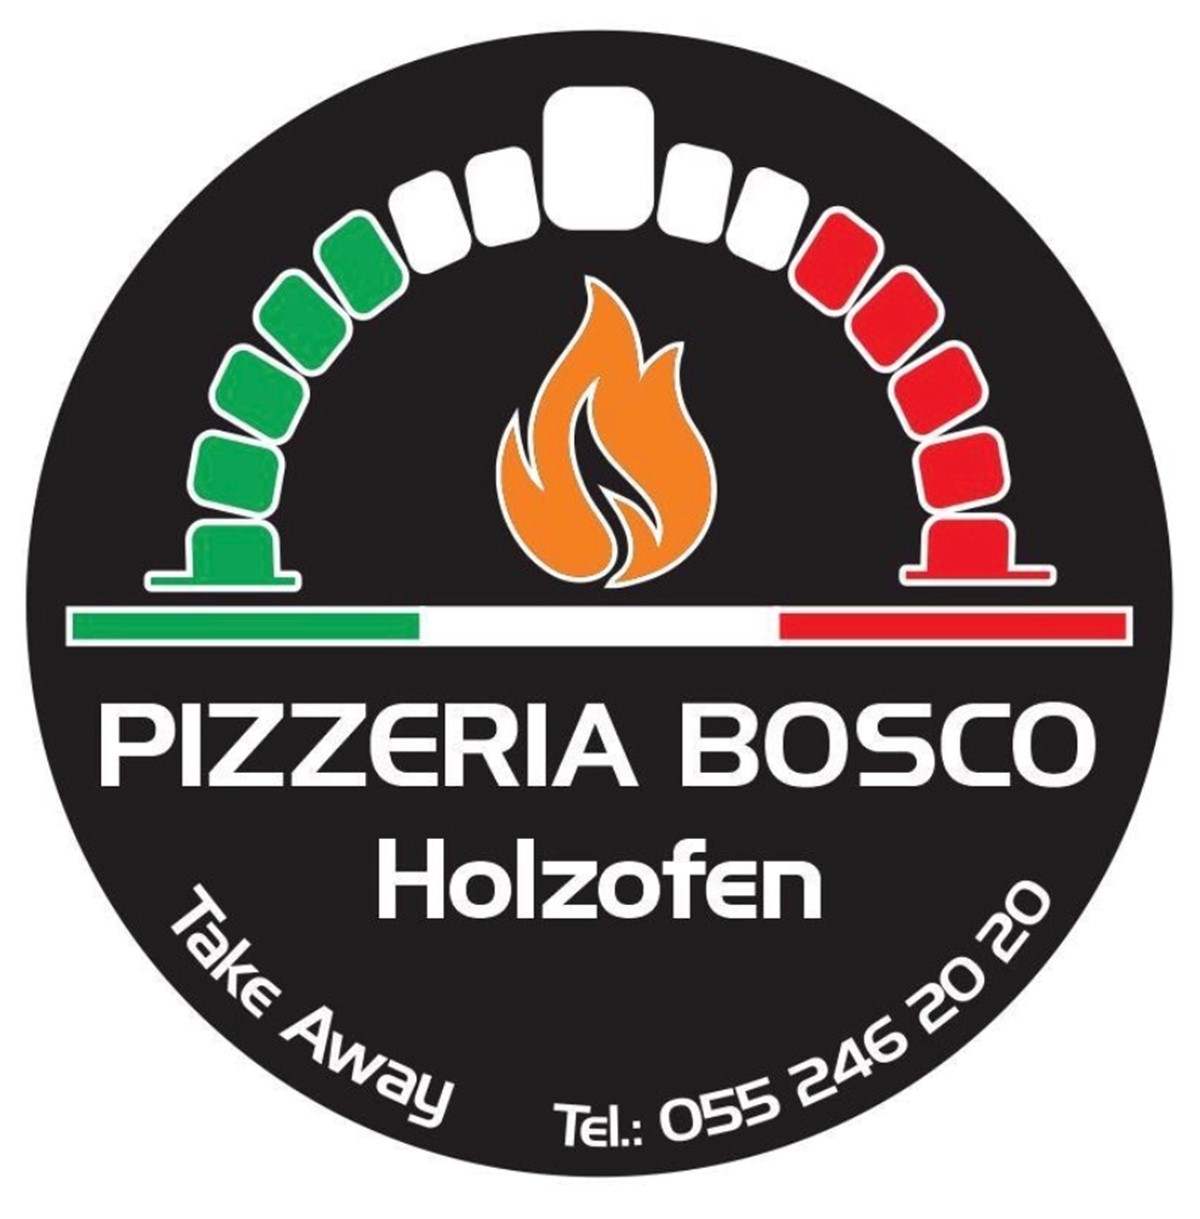 Pizzeria Bosco